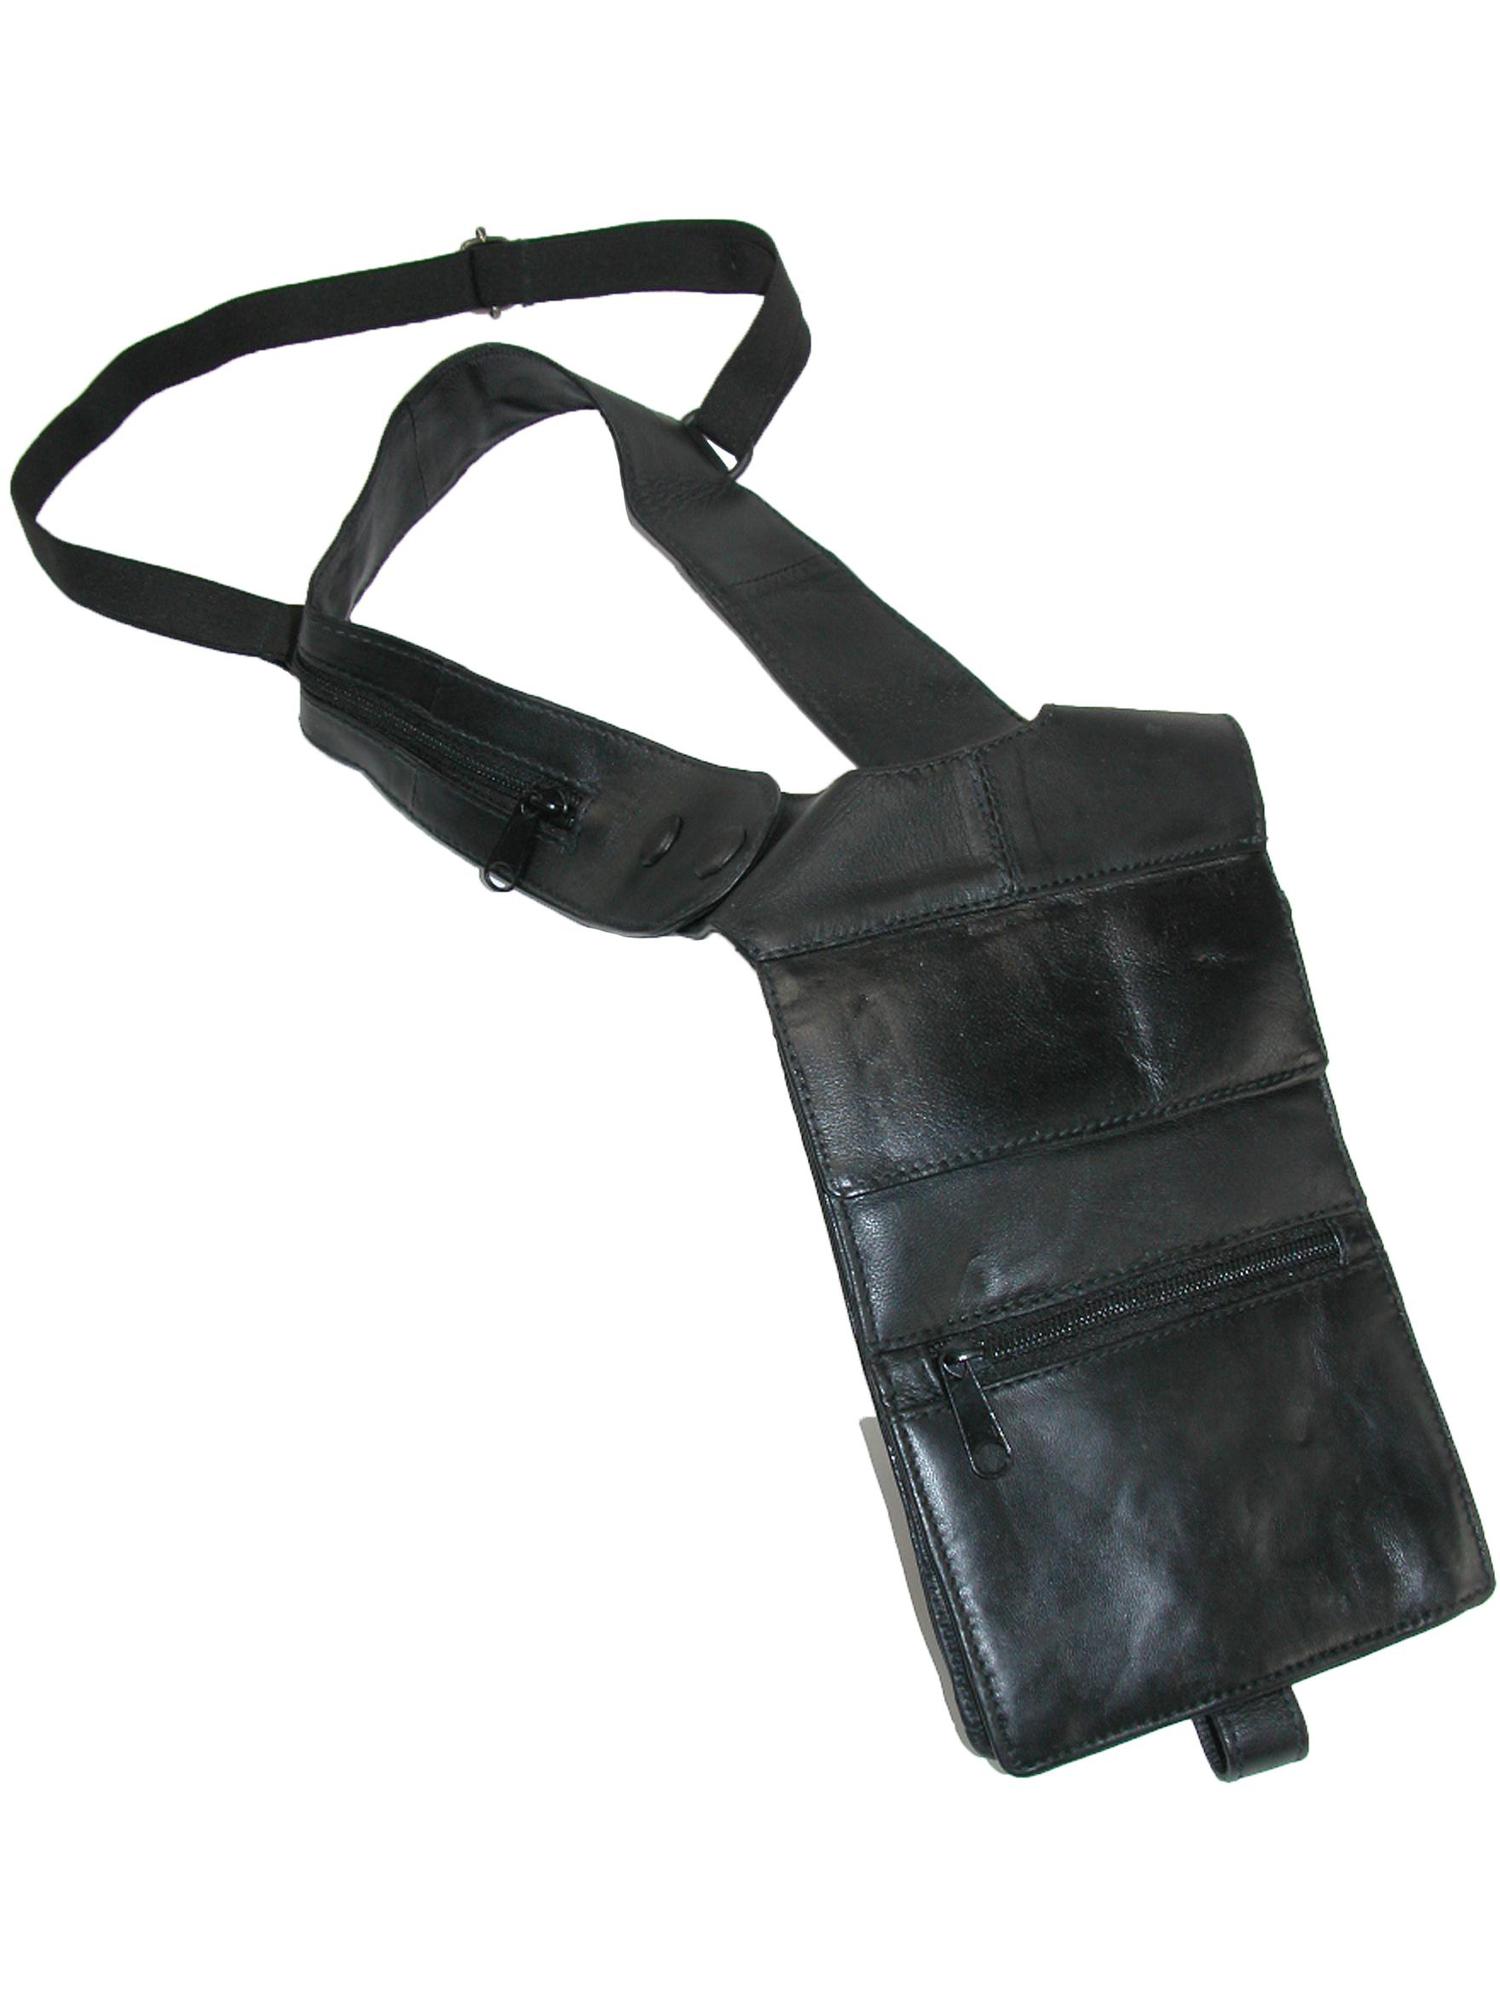 CTM Leather Deluxe Travel Shoulder Wallet - image 1 of 2